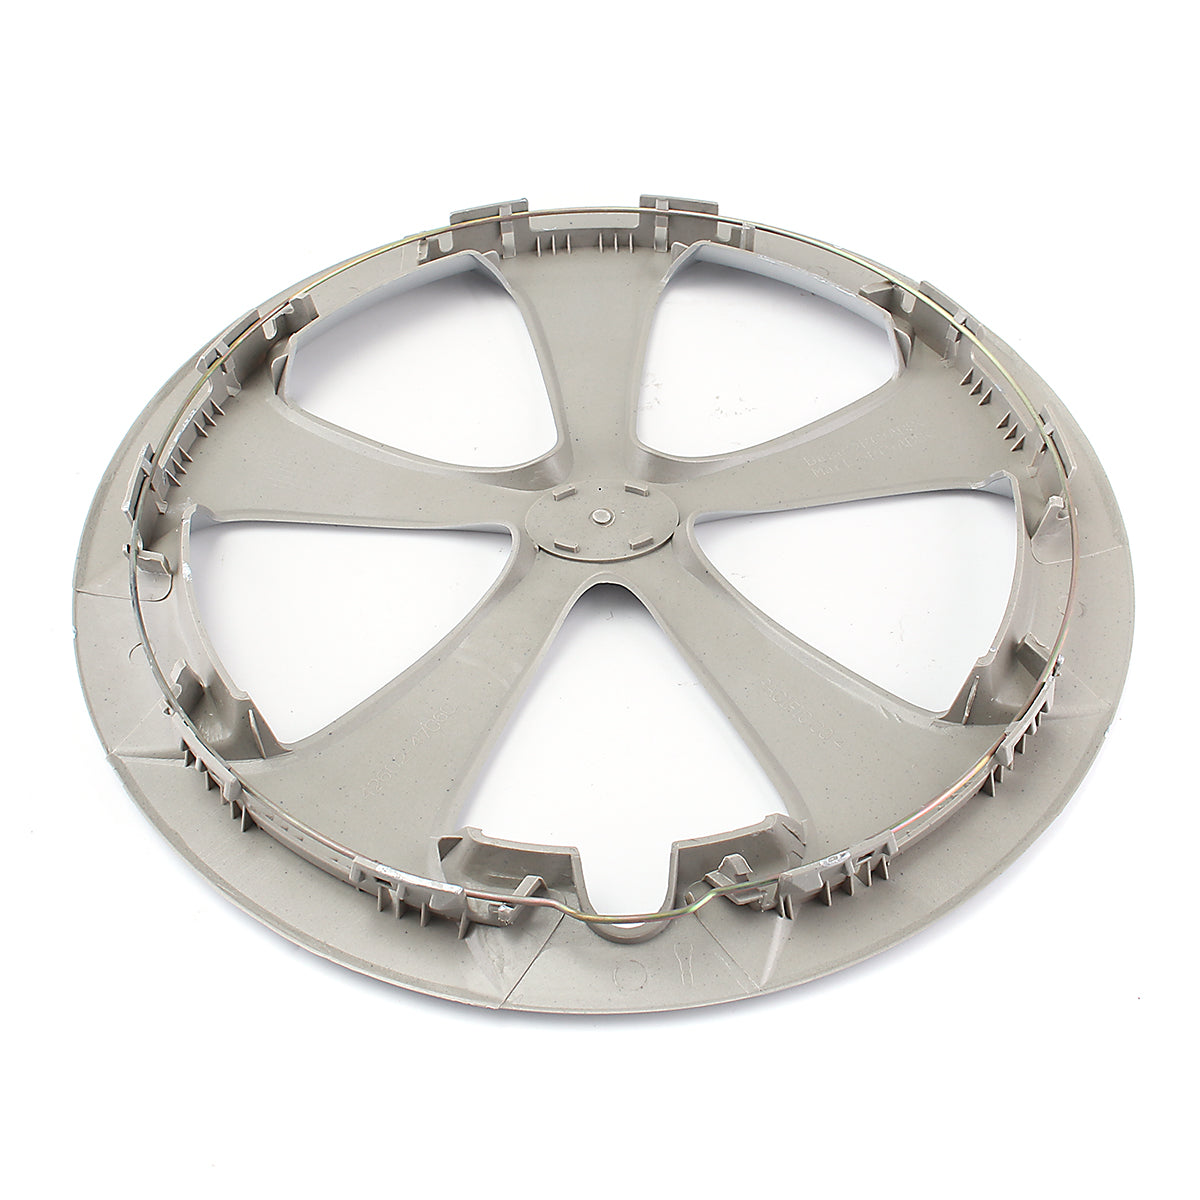 Gray 40.8cm Silver Plastic Car Wheel Tire Cover for Toyota Prius/Prius C 2012-2015